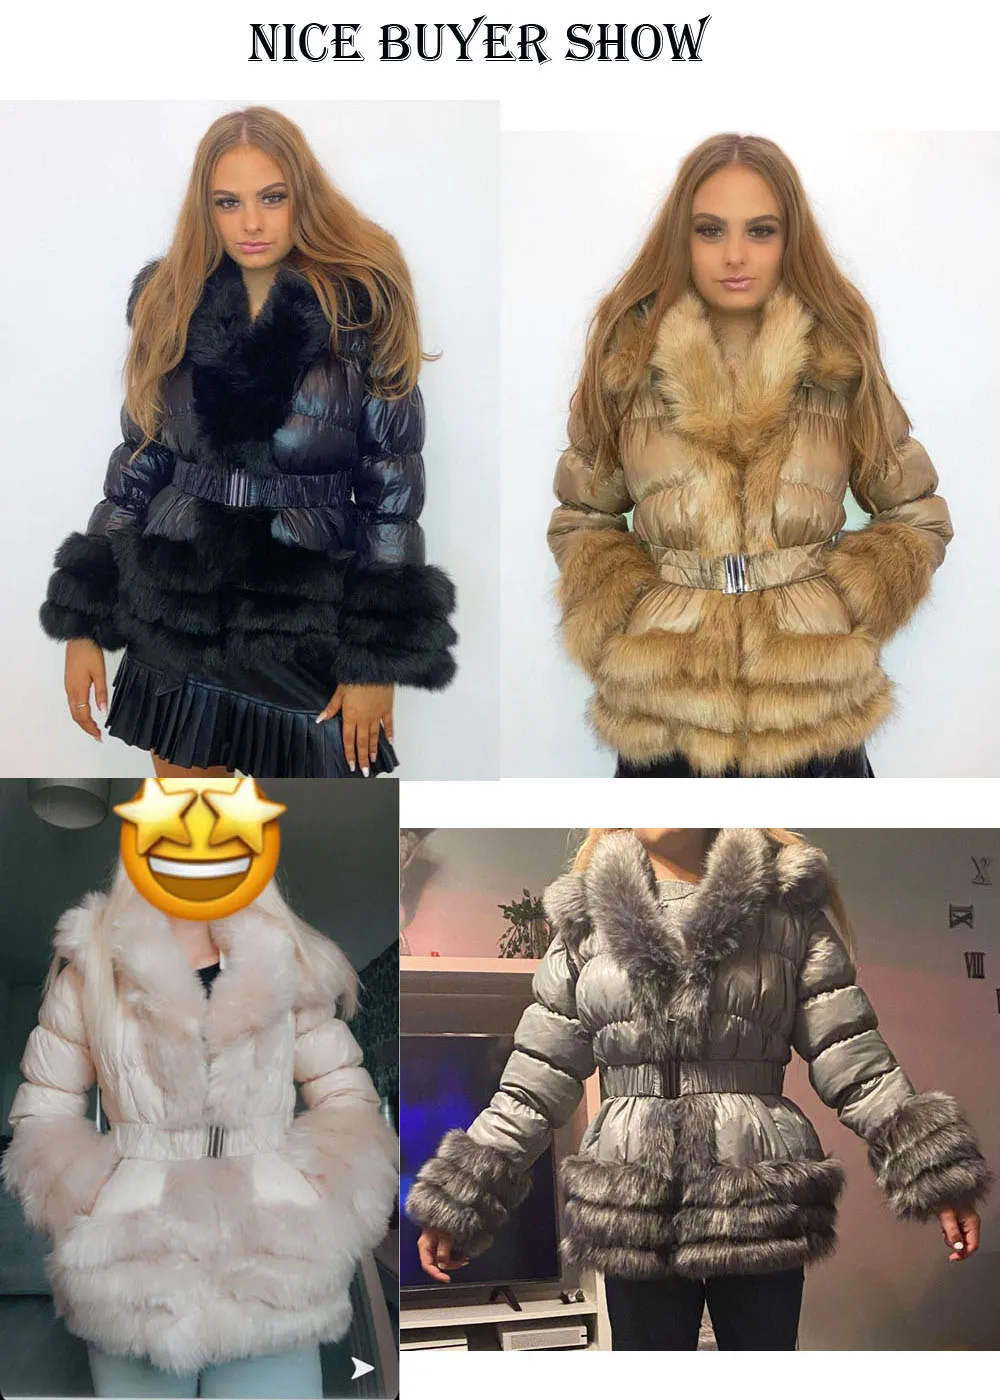 STORTO Womens Fluffy Coats，Warm Winter Puff Parkas Jacket Solid Winter Outerwear